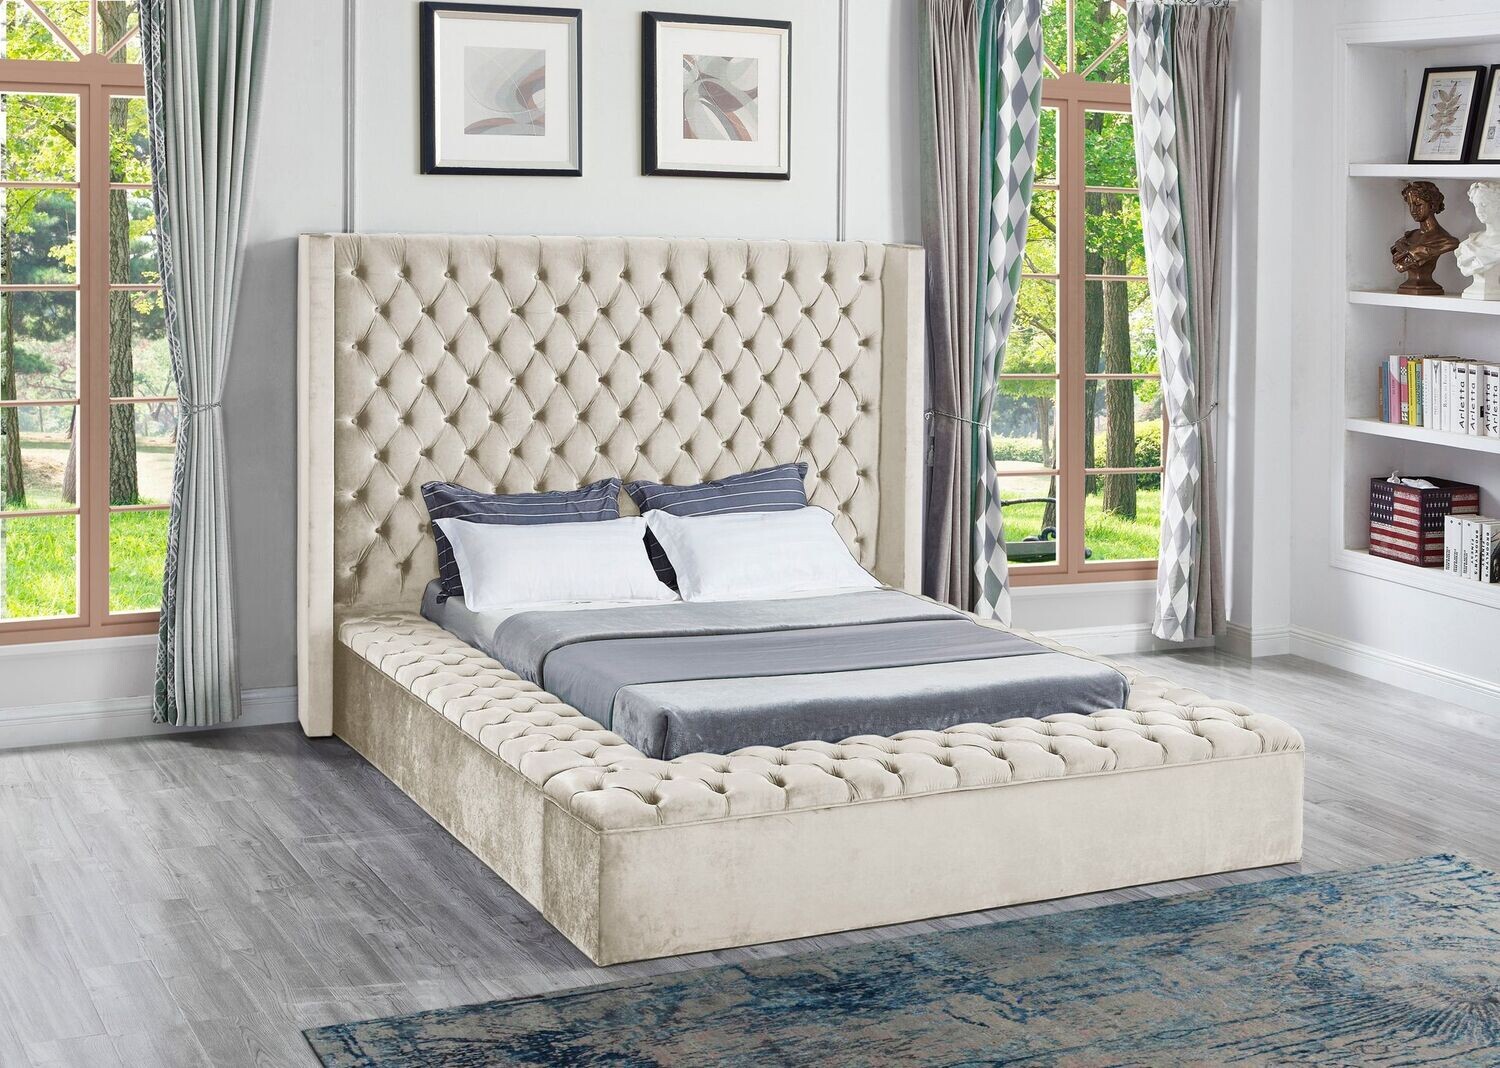 Beige Upholstered Queen Bed with Storage